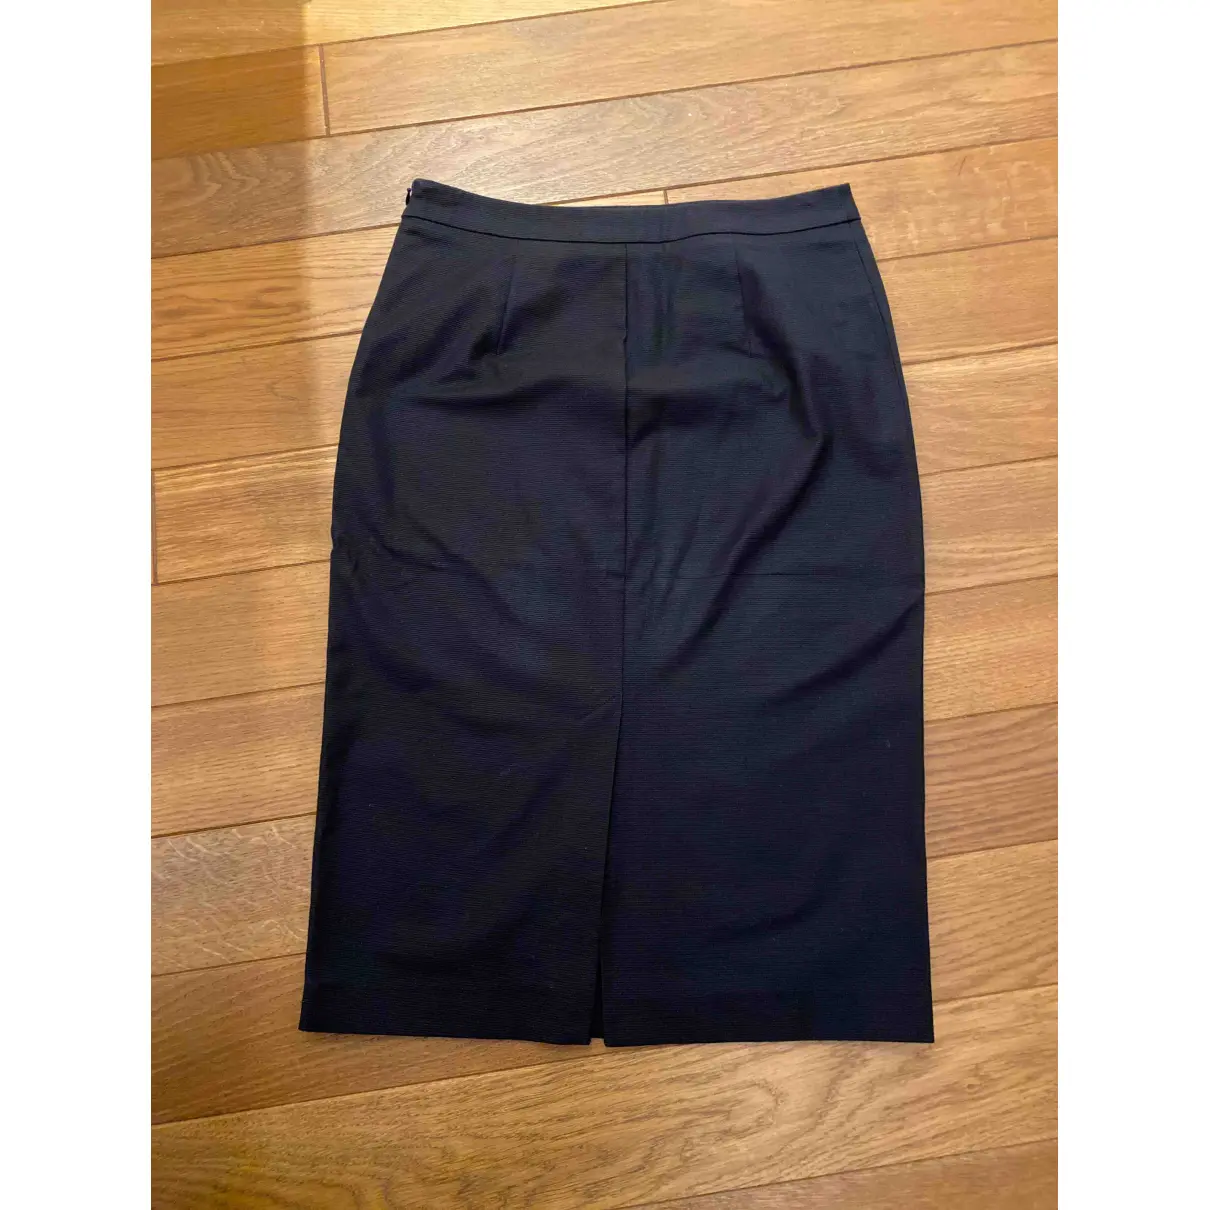 Buy Moschino Love Mid-length skirt online